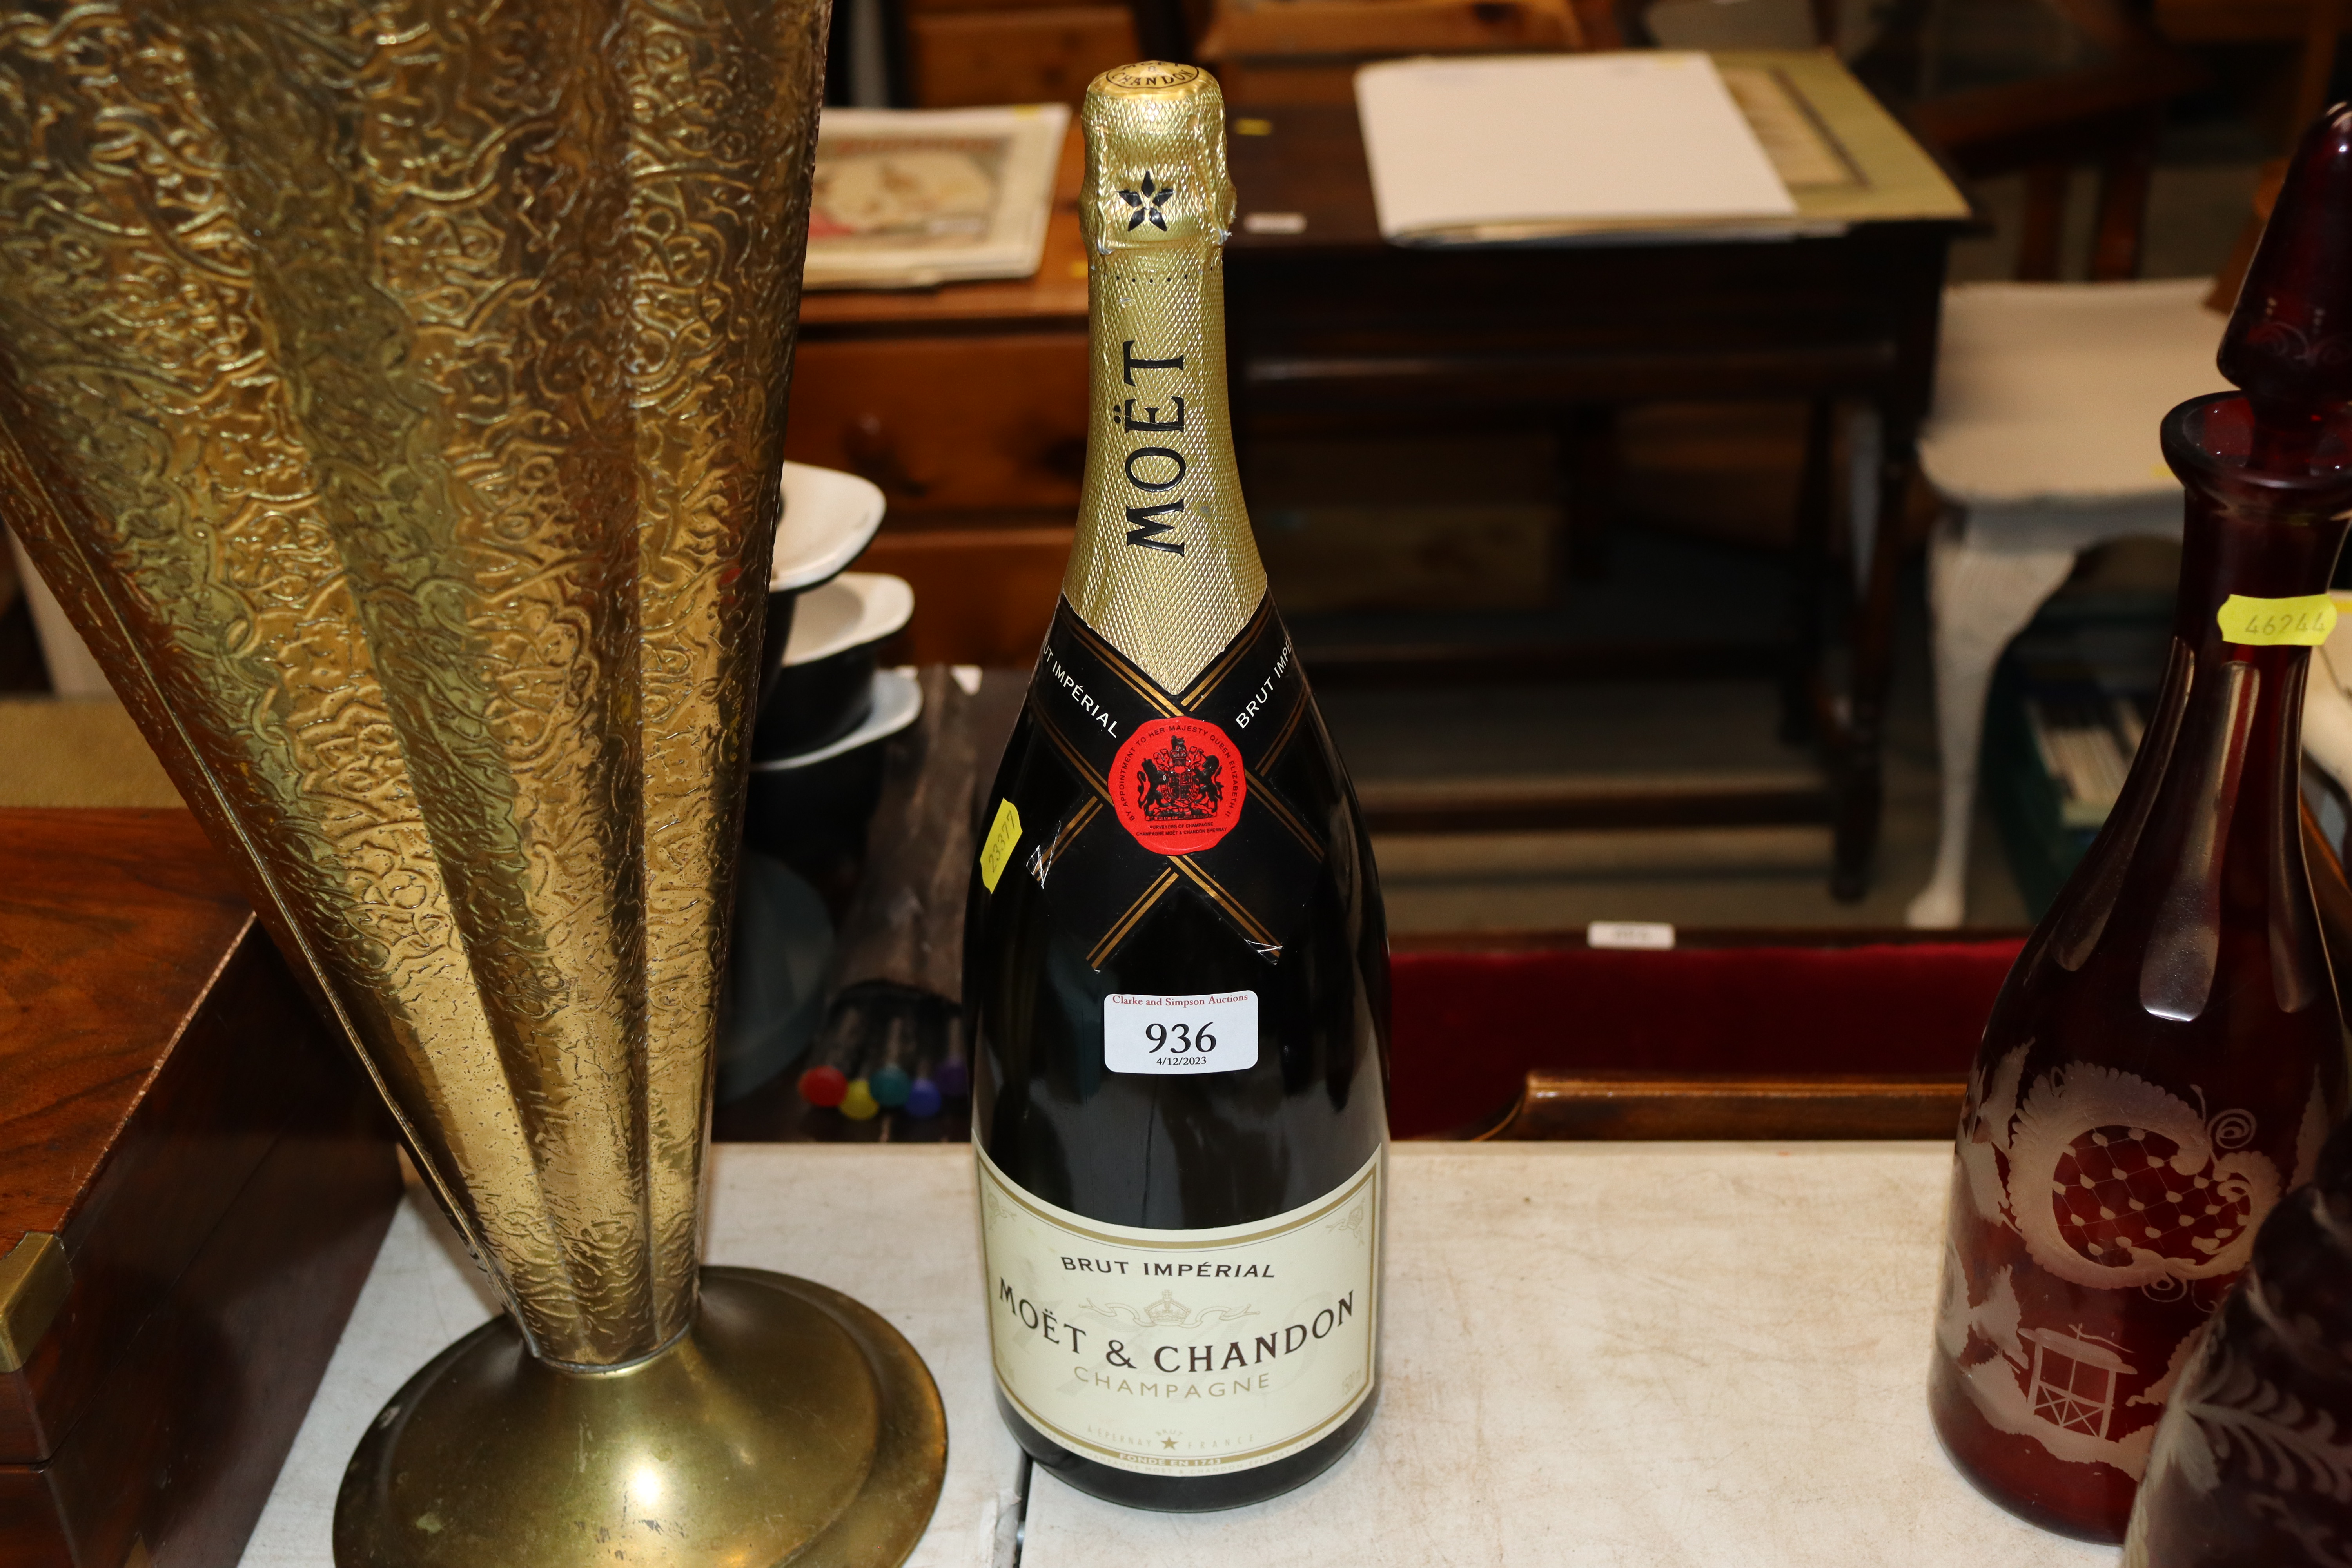 A 1500ml bottle of Moët & Chandon champagne